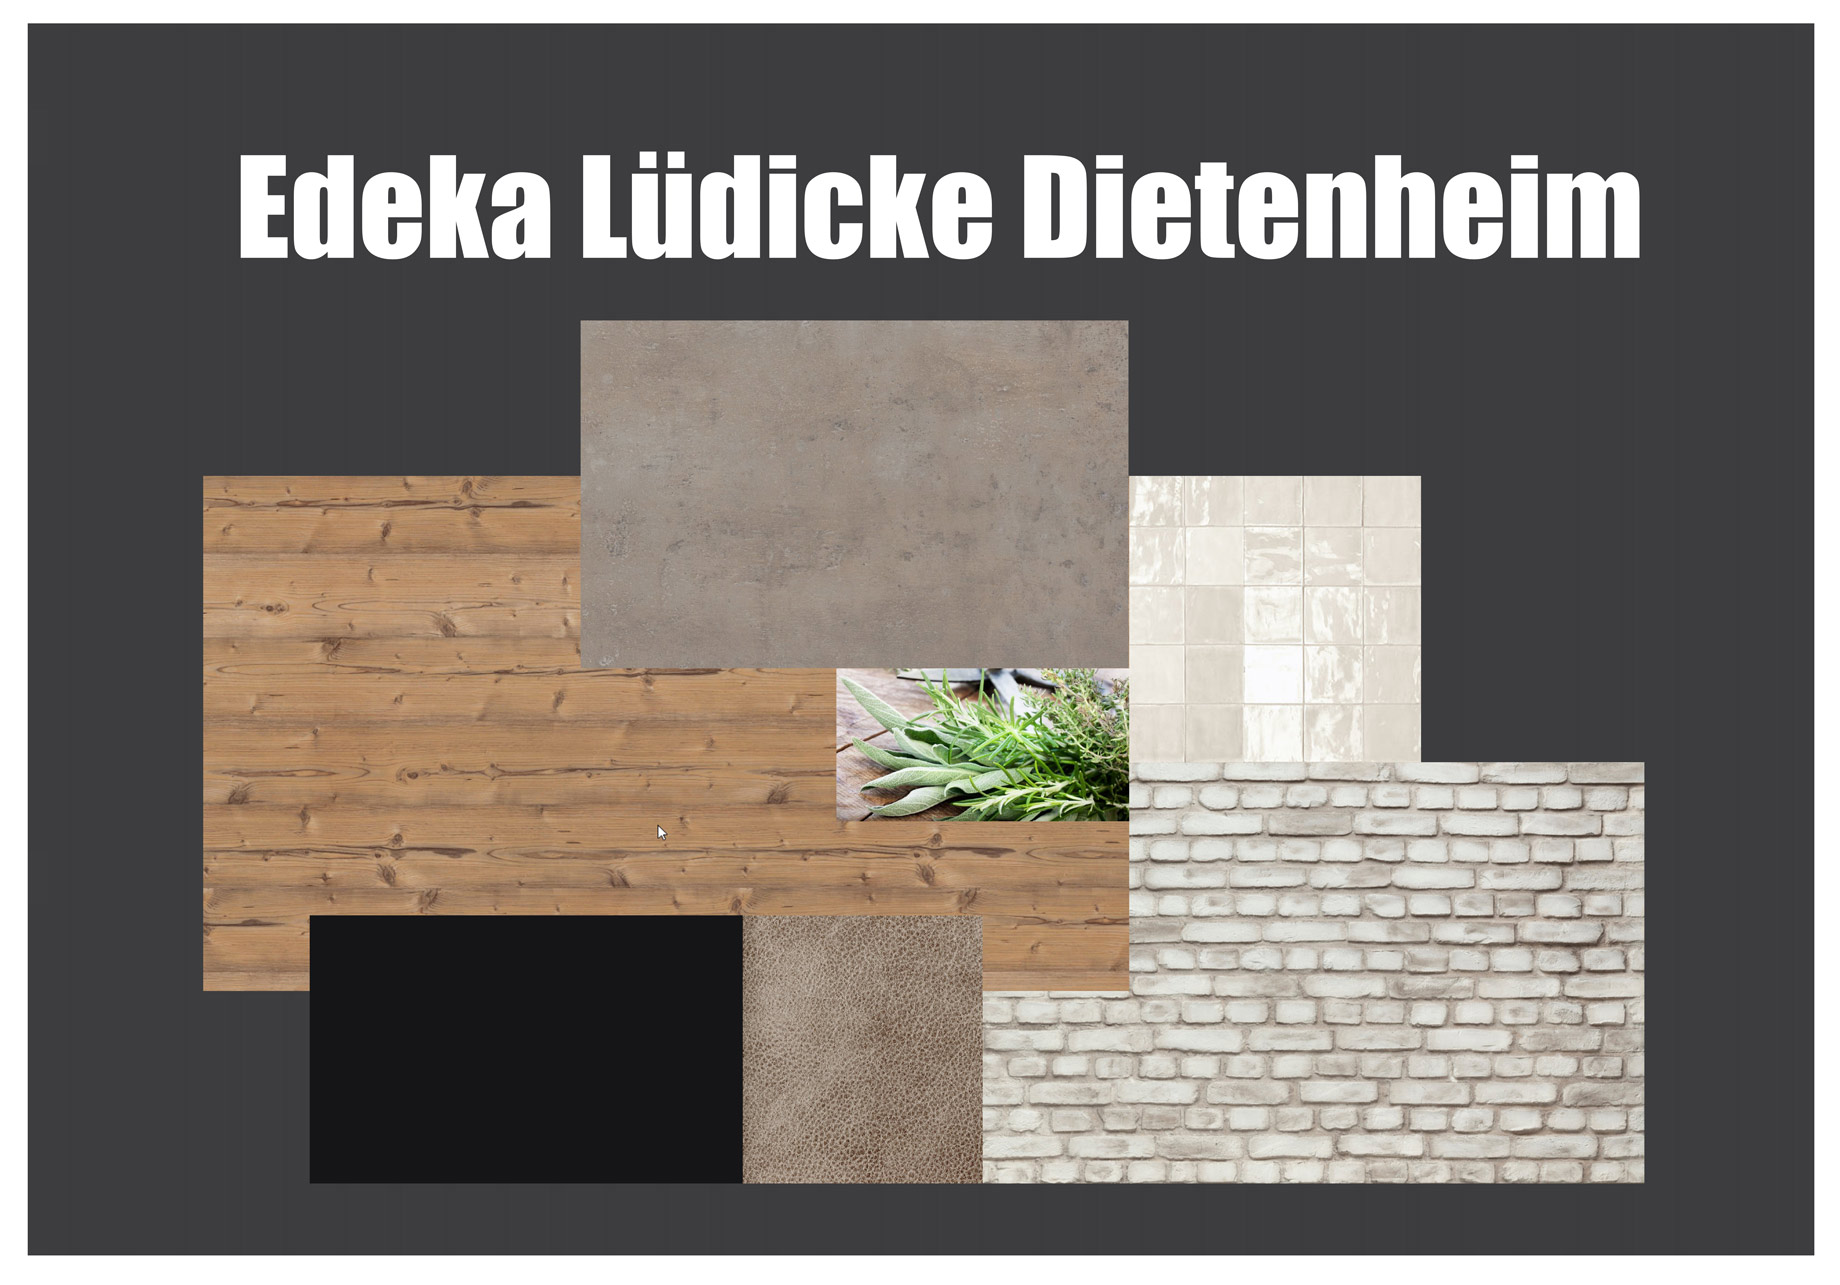 Baeckerei-Edeka-Luedicke